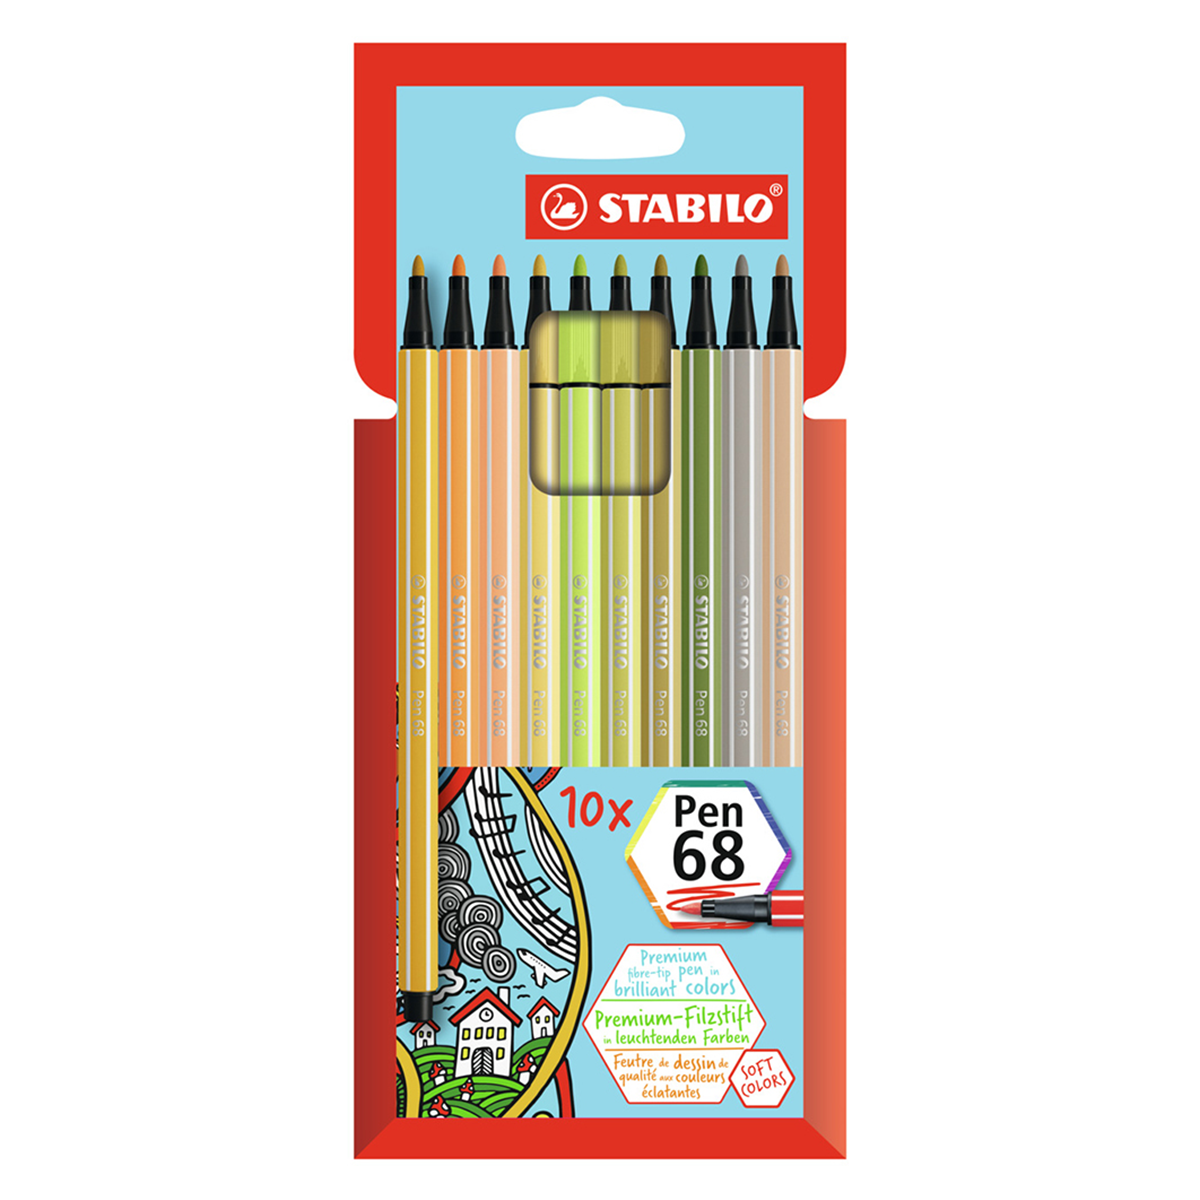 Premium felt-tip pen STABILO Pen 68 - pack of 30 colors